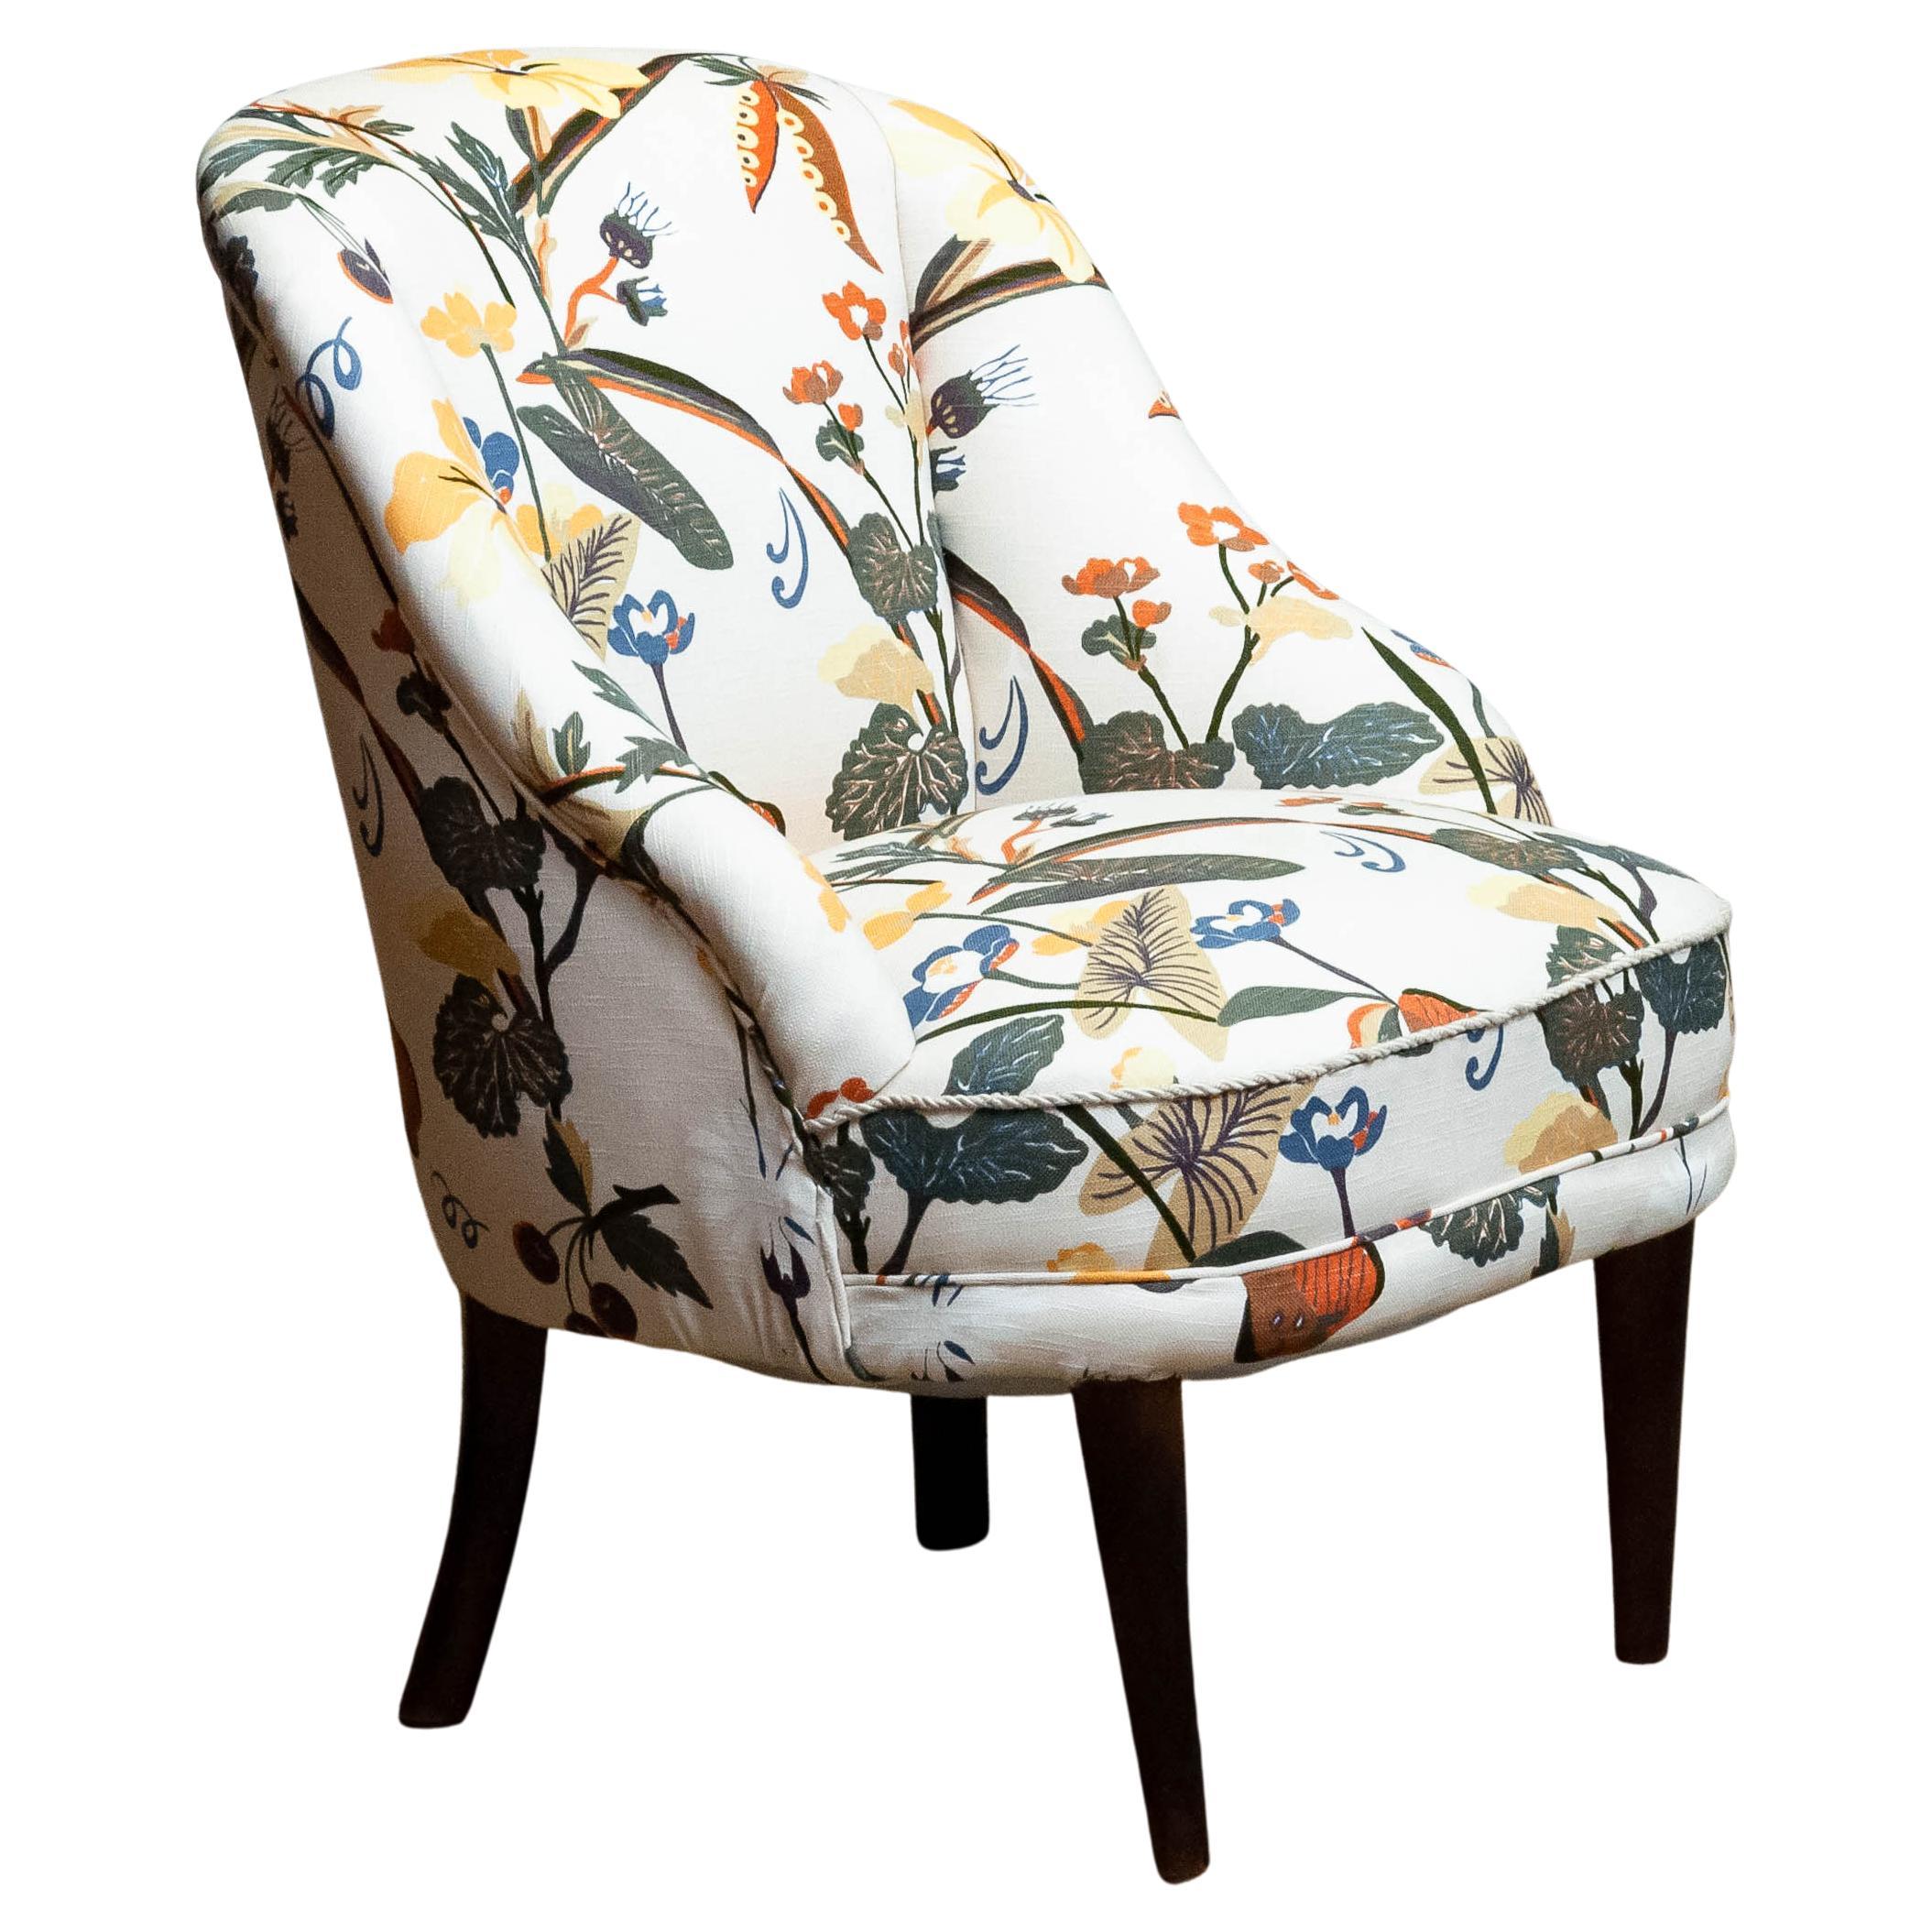 '40s Floral Printed Linen, J. Frank Style, New Upholstered Danish Slipper Chair For Sale